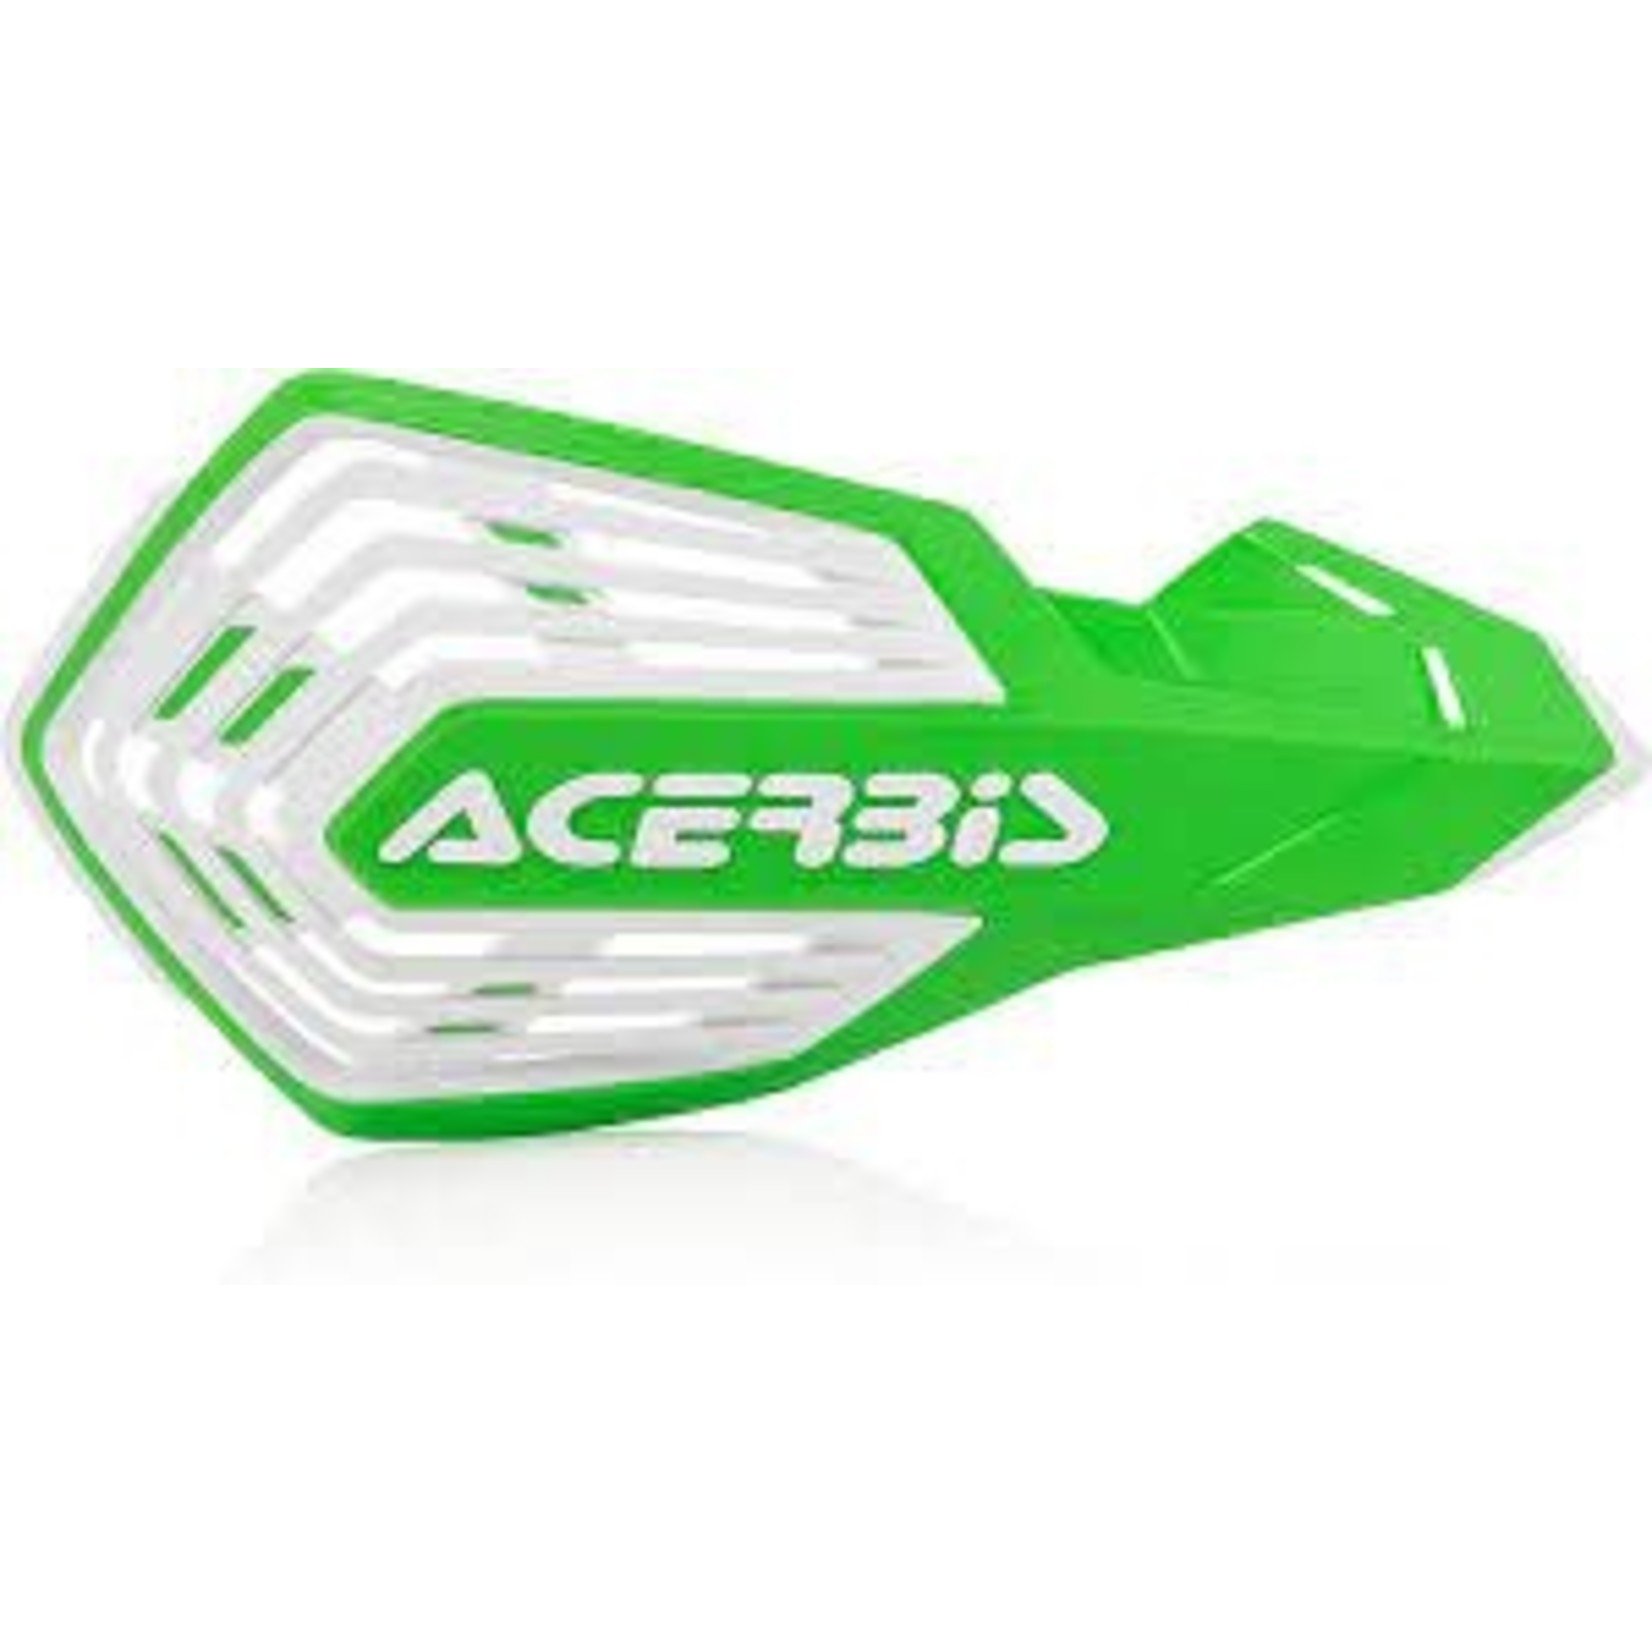 ACERBIS ACERBIS HANDGUARDS X-FUTURE GREEN/WHITE 280196-1075